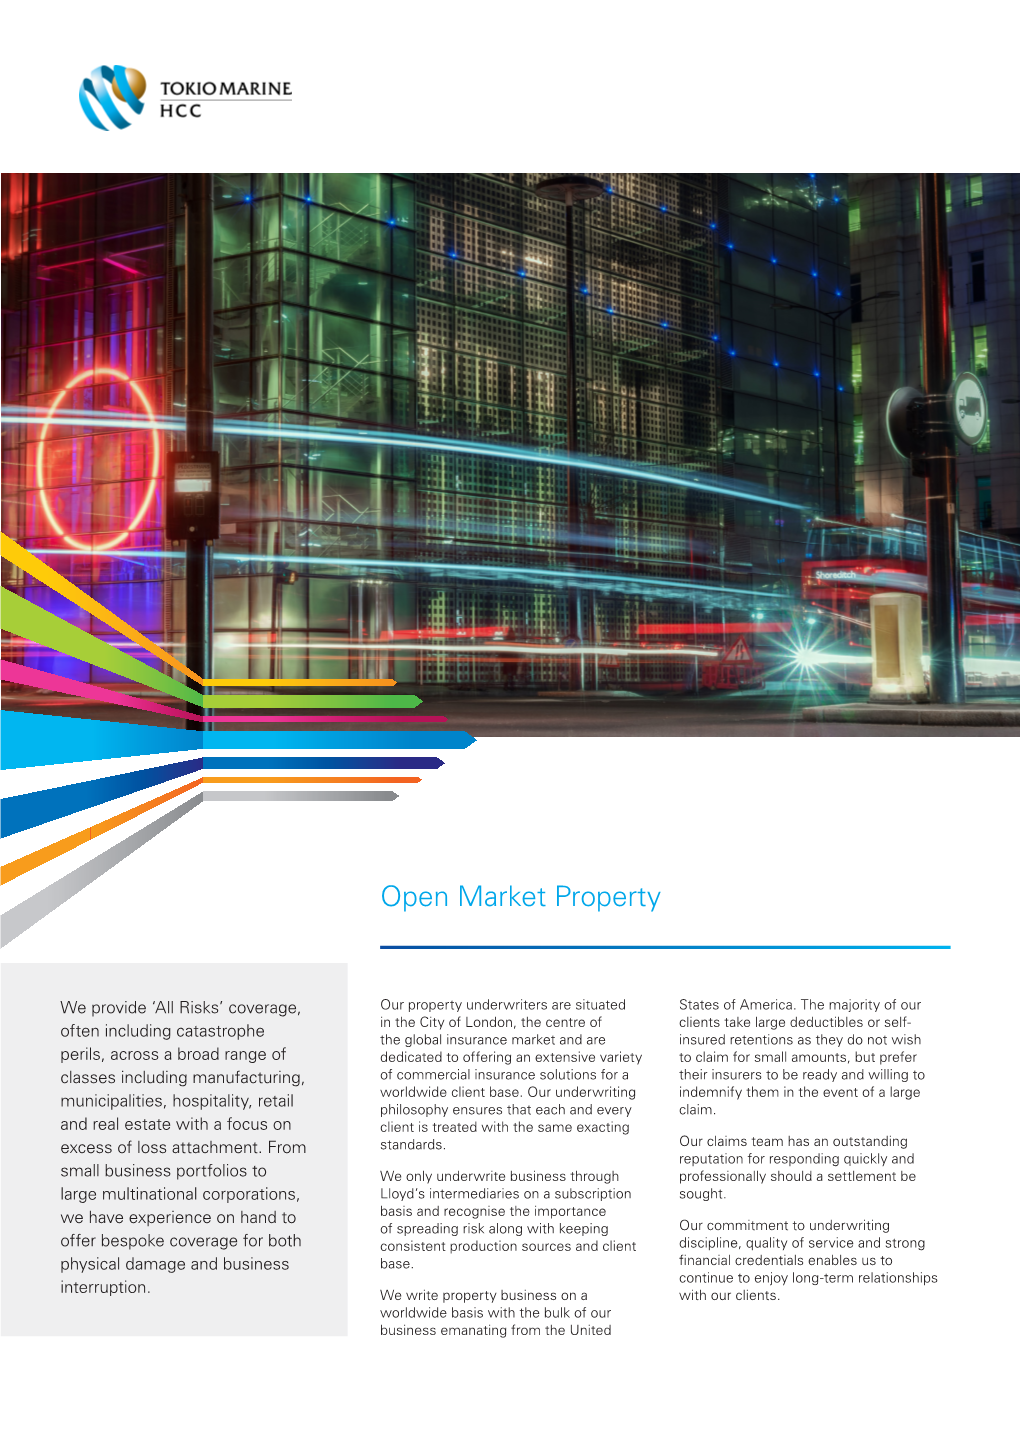 Open Market Property Brochure